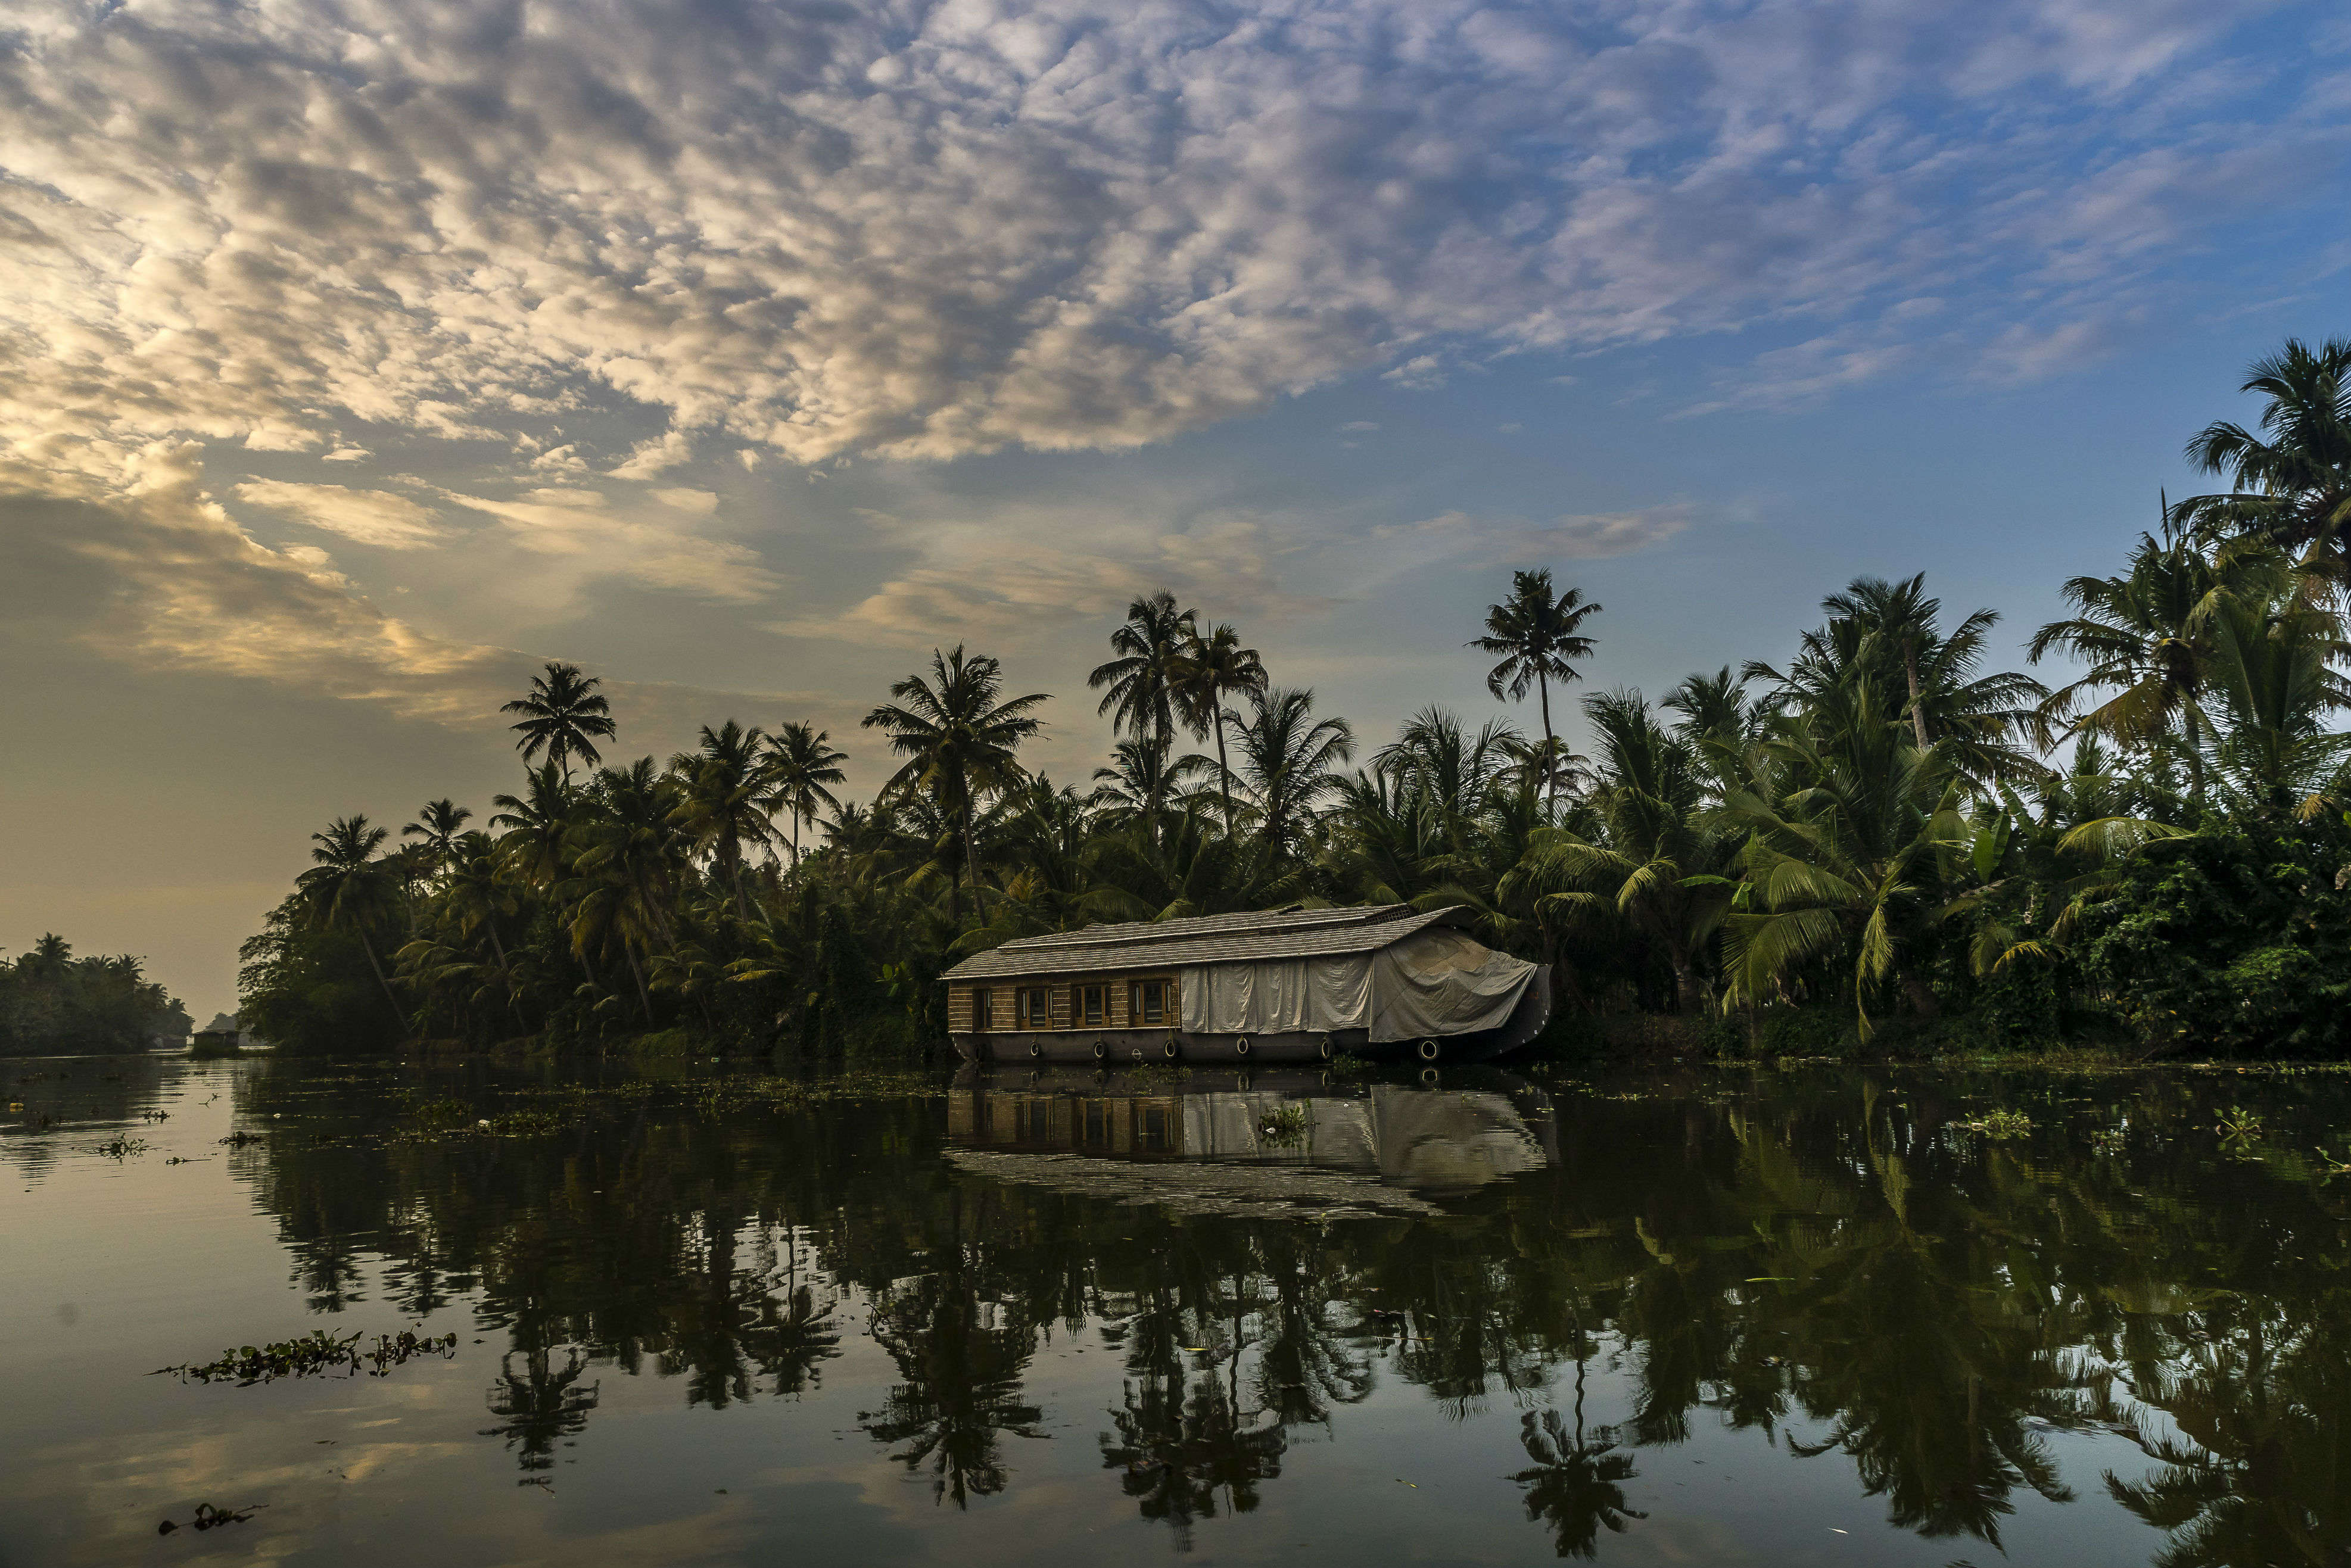 IRCTC introduces an irresistible Kerala tour package